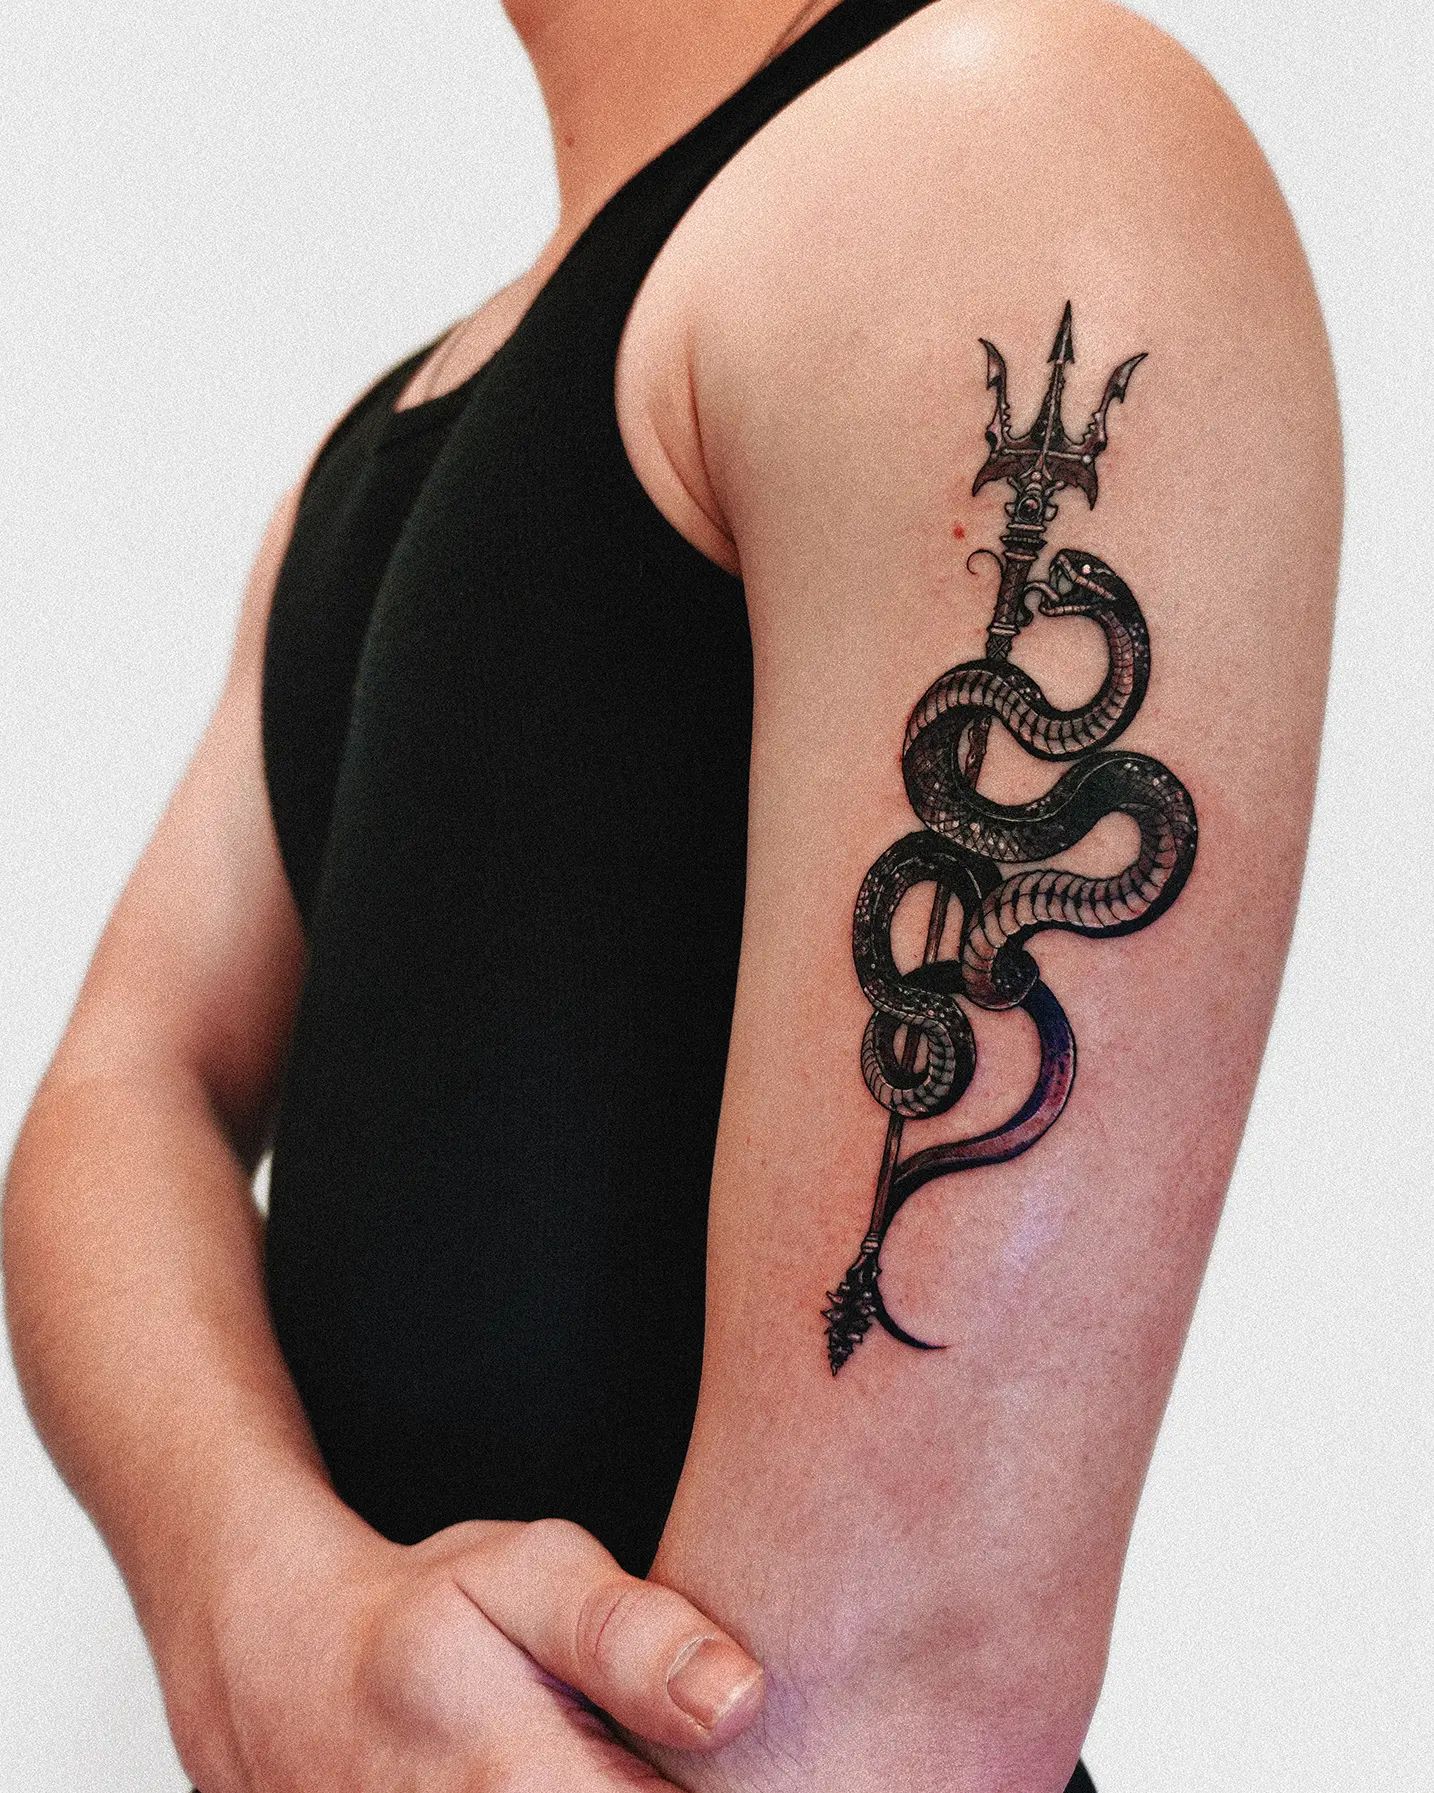 Atlantis king with trident tattoo idea | TattoosAI